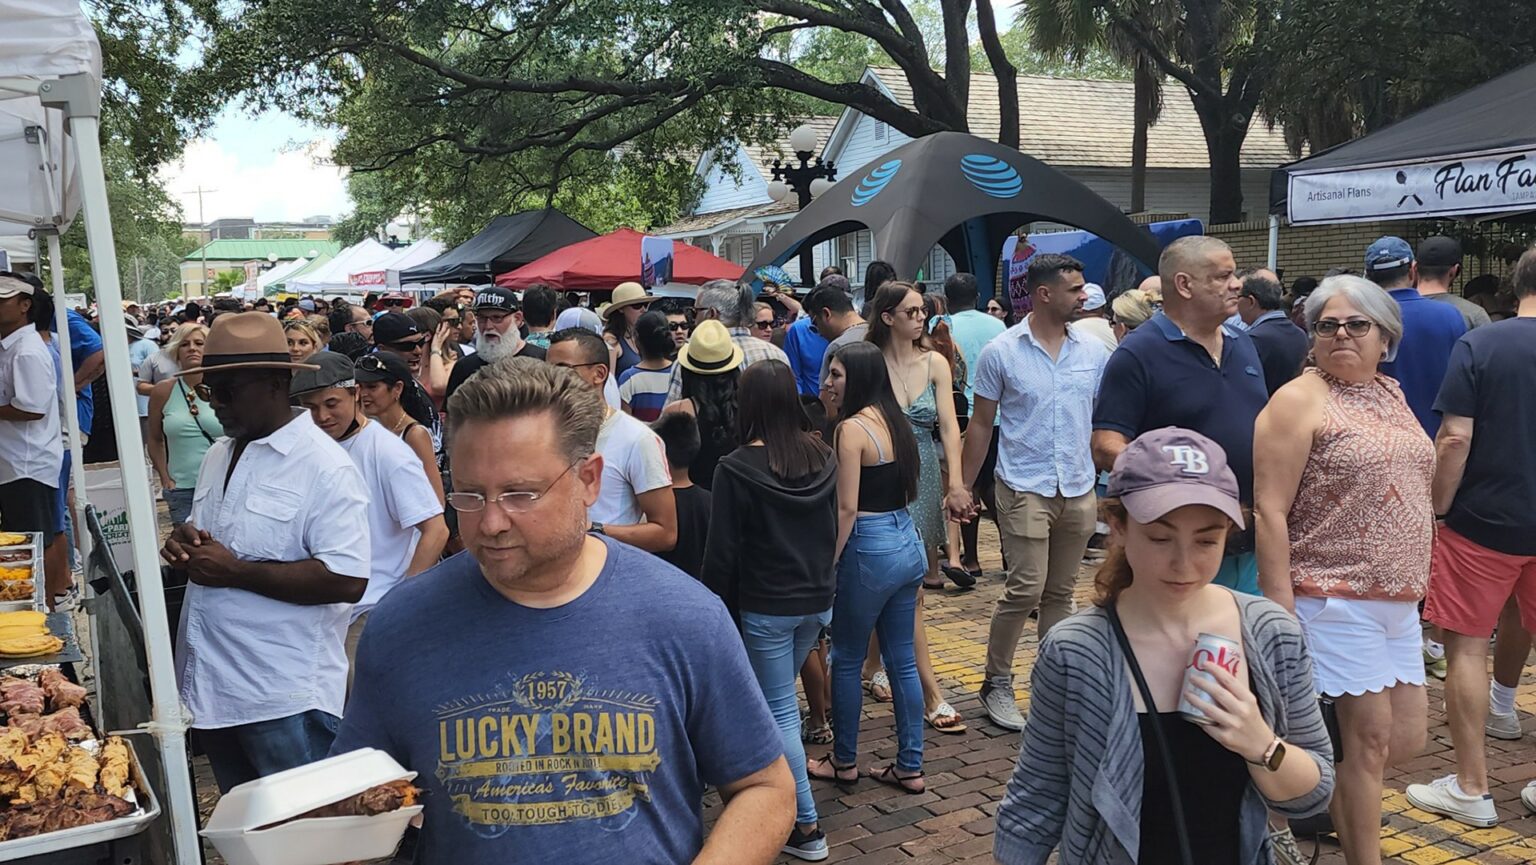 Cuban sandwich Festival returns this April That's So Tampa